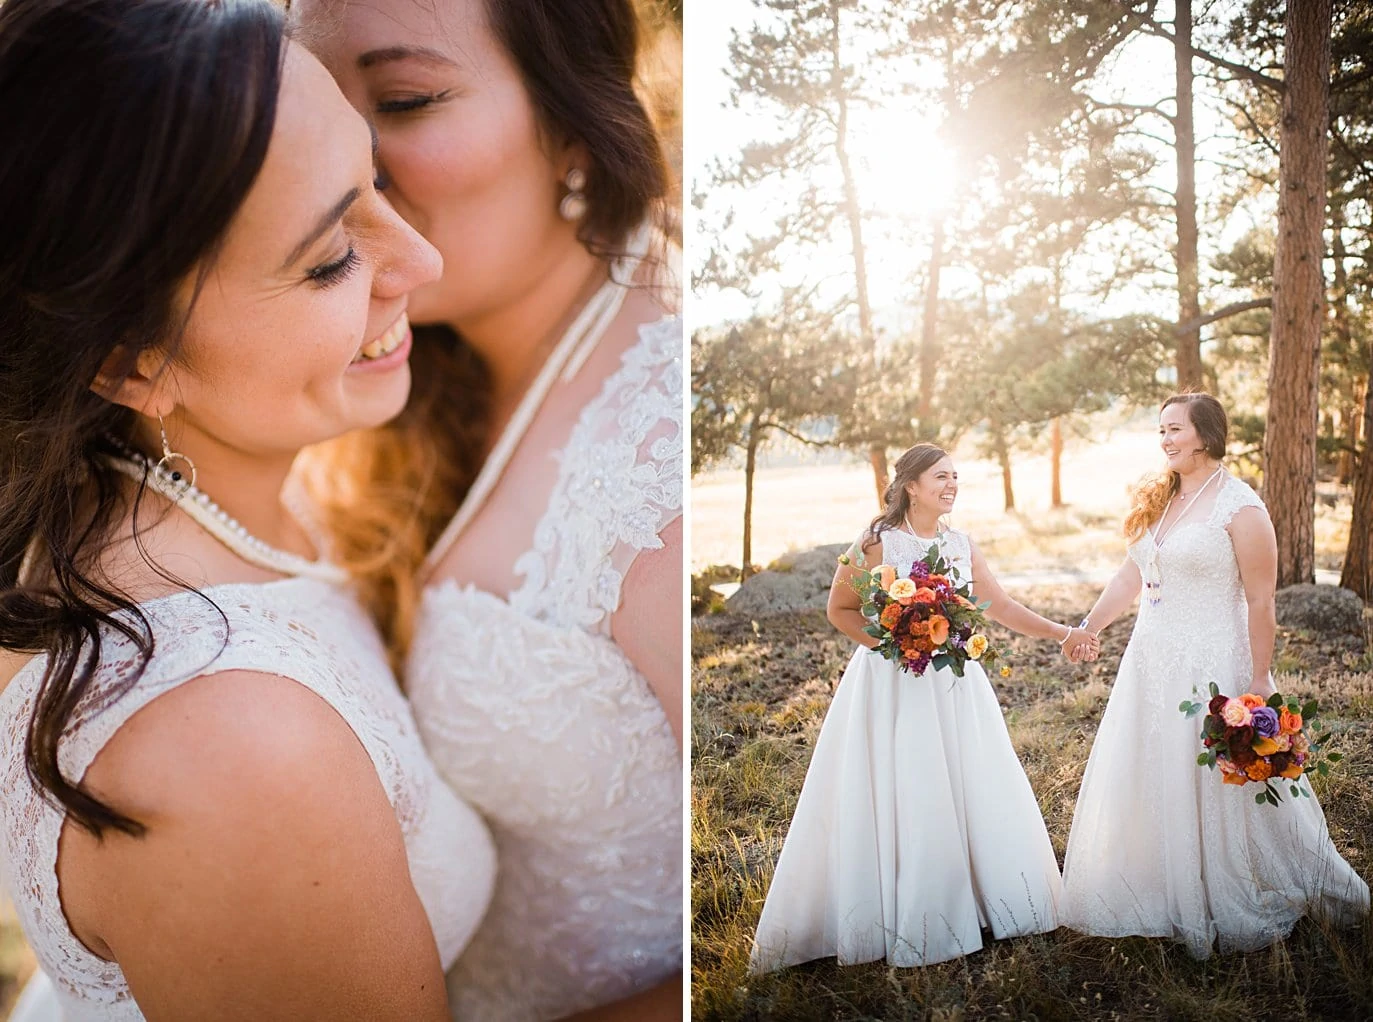 two brides sunset portraits at Deer Creek Valley Ranch same-sex wedding by Denver LGBT wedding photographer Jennie Crate